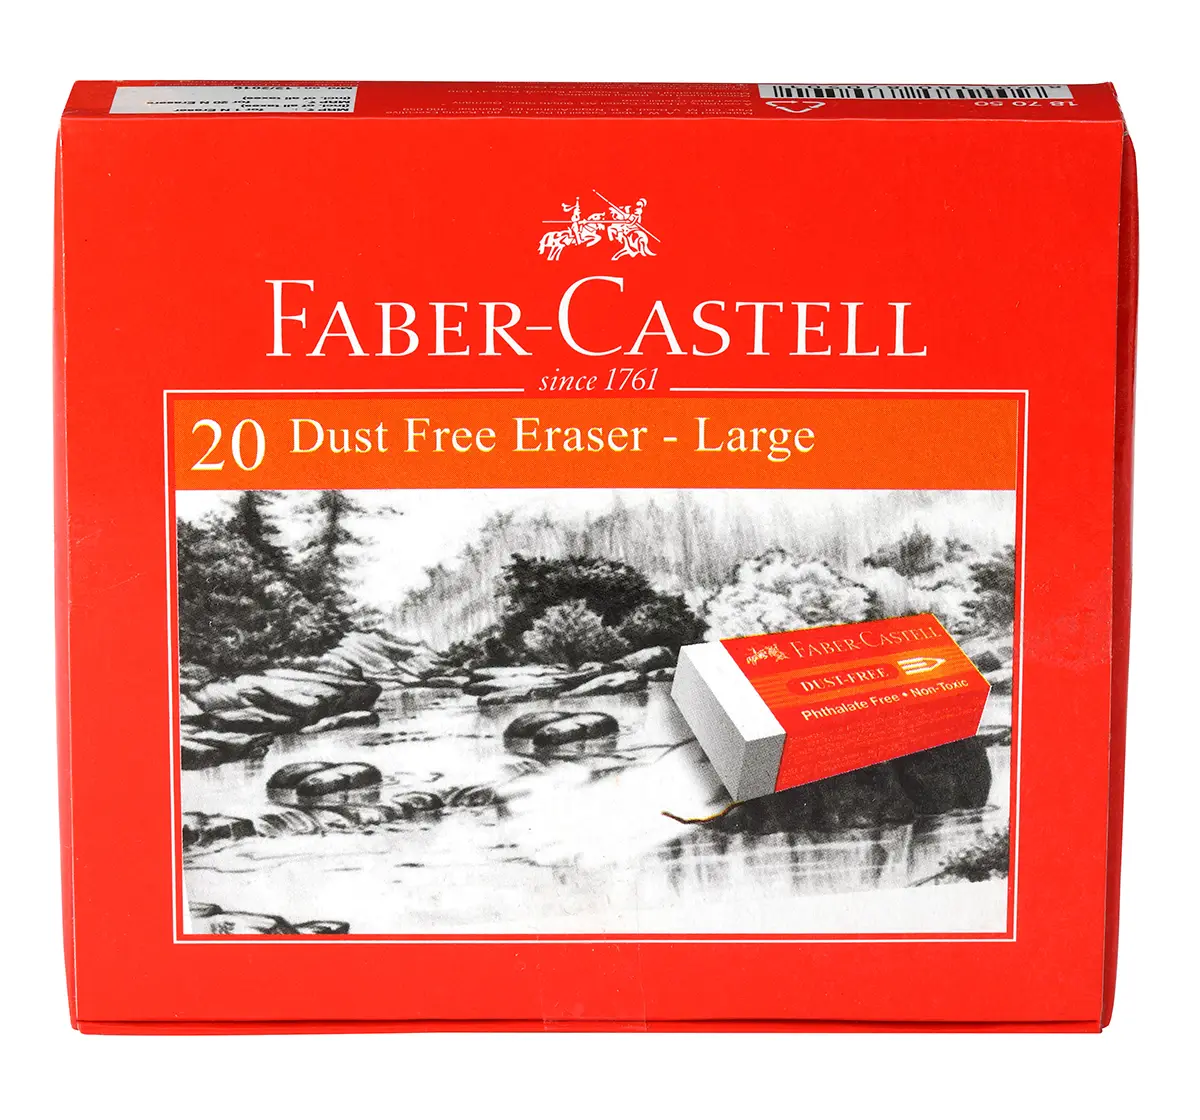 Faber-Castell  dustfree eraser large box 20, 10Y+